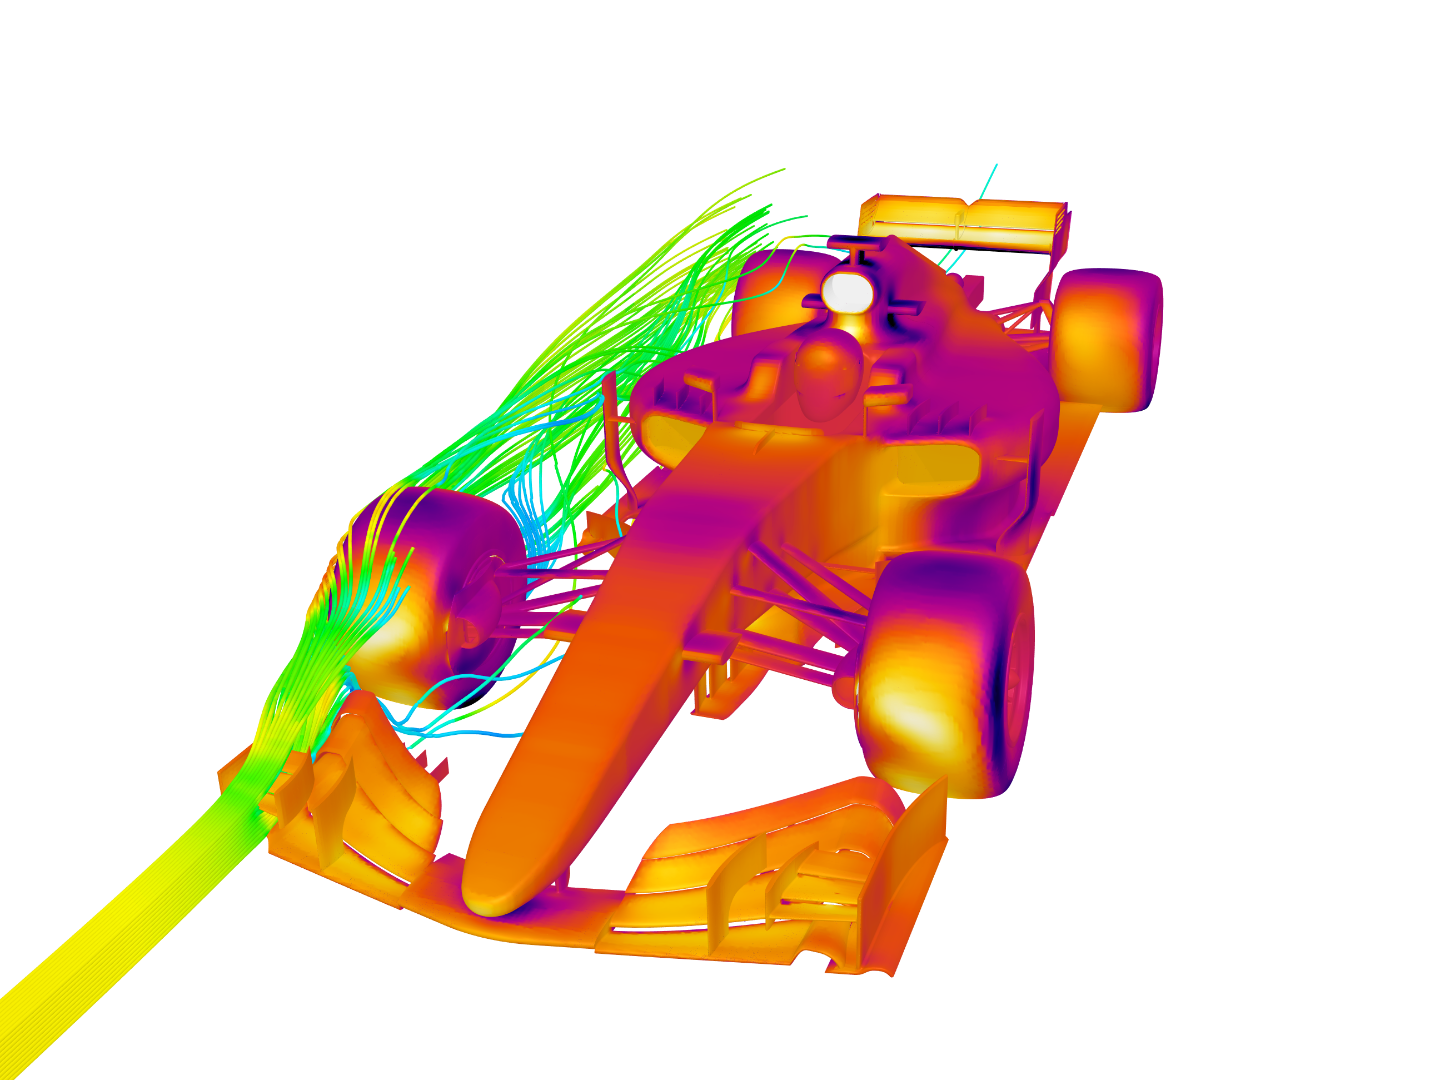 F1 working image